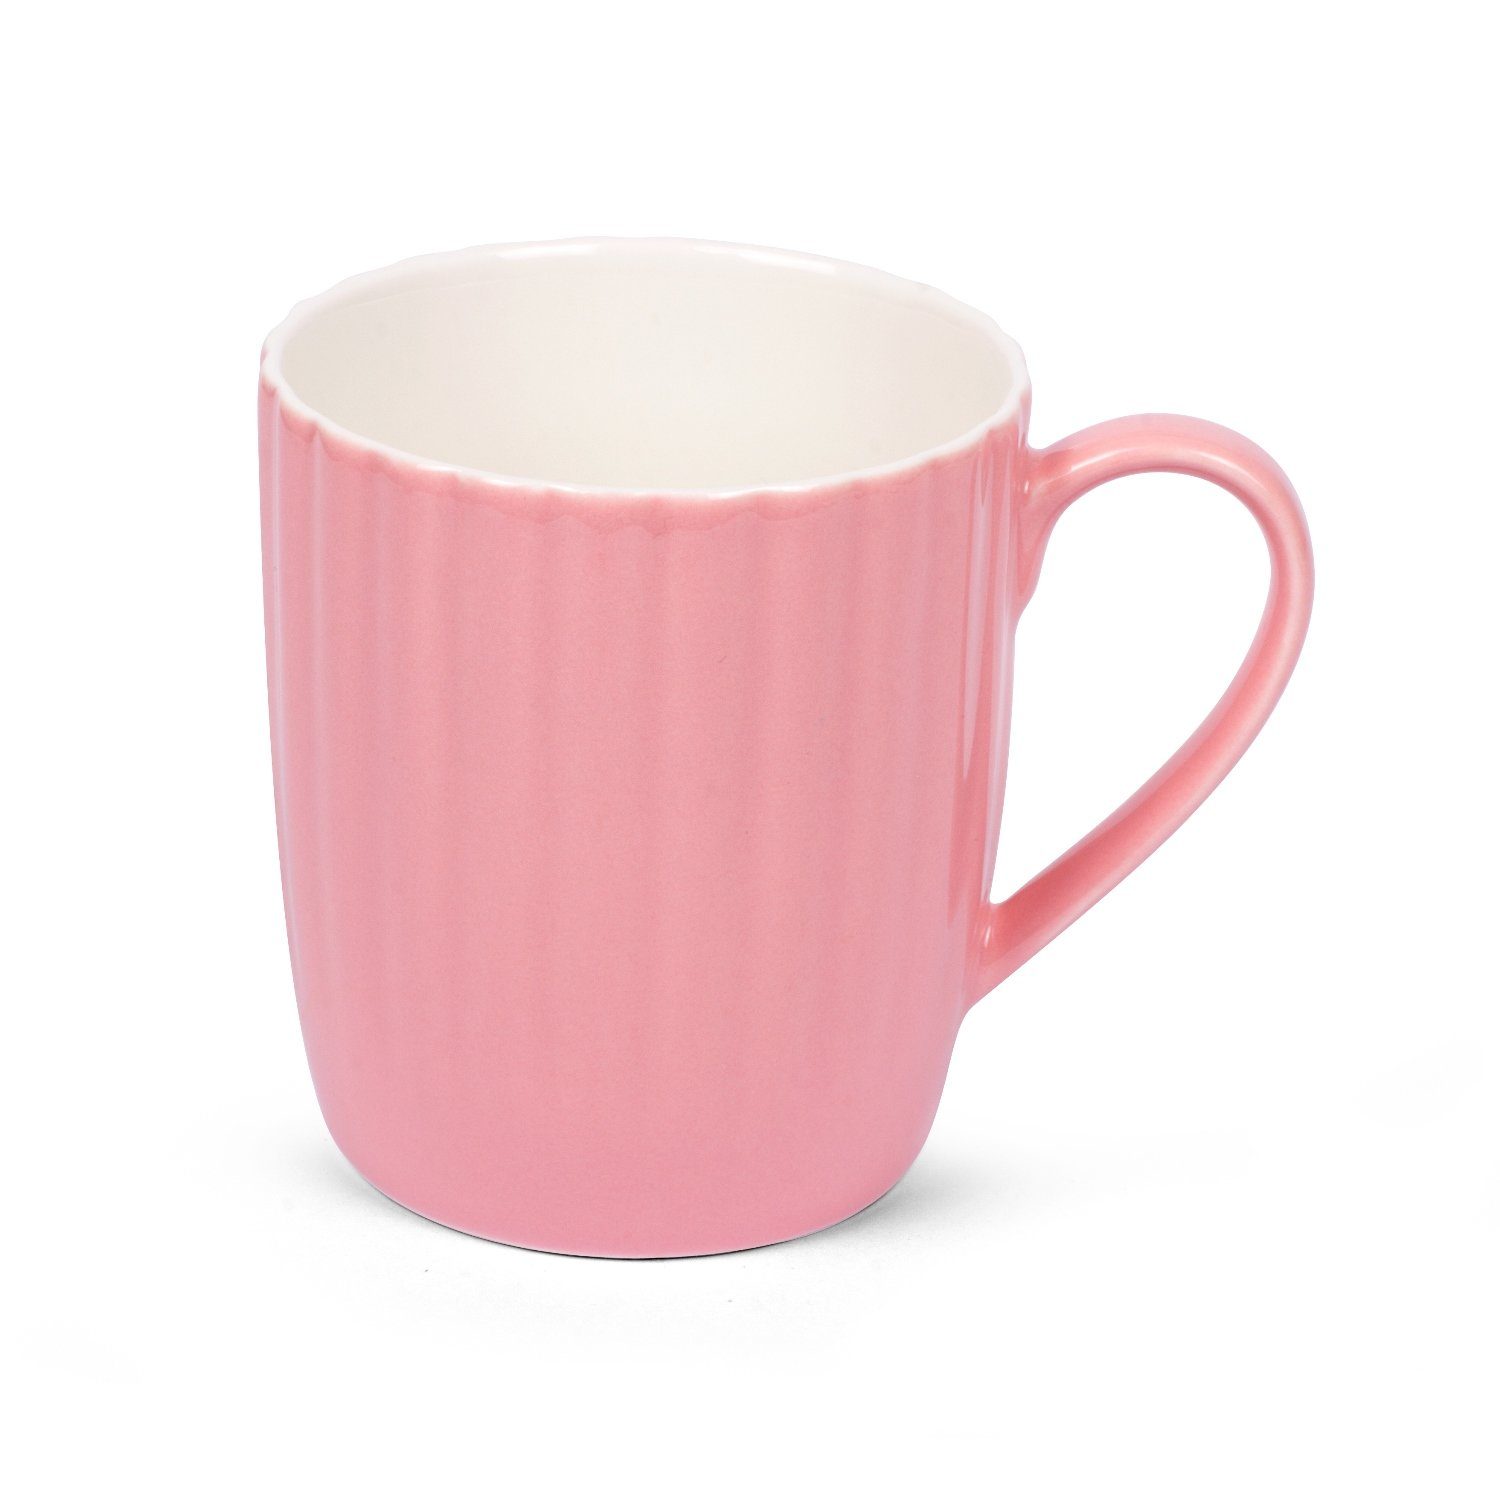 Home - Pusheen Tasse Geschenkset Thumbs - Pink Cupcake, Up Keramik, mit Socke Tasse